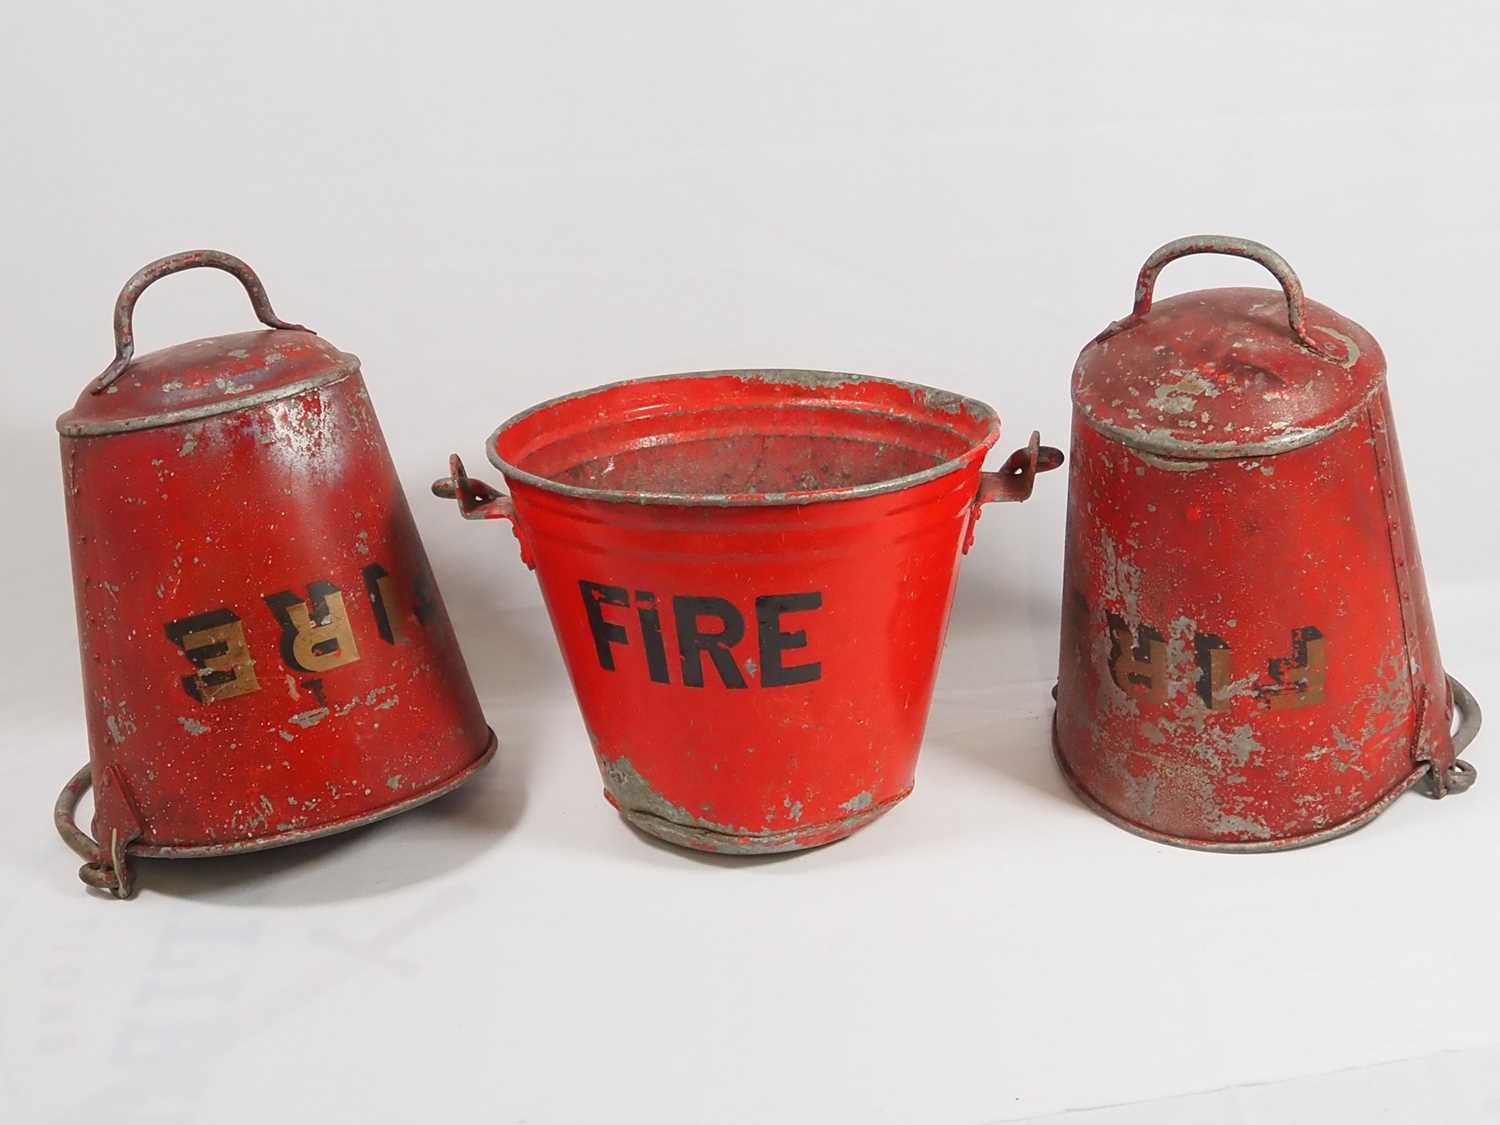 Vintage Fire buckets (3)